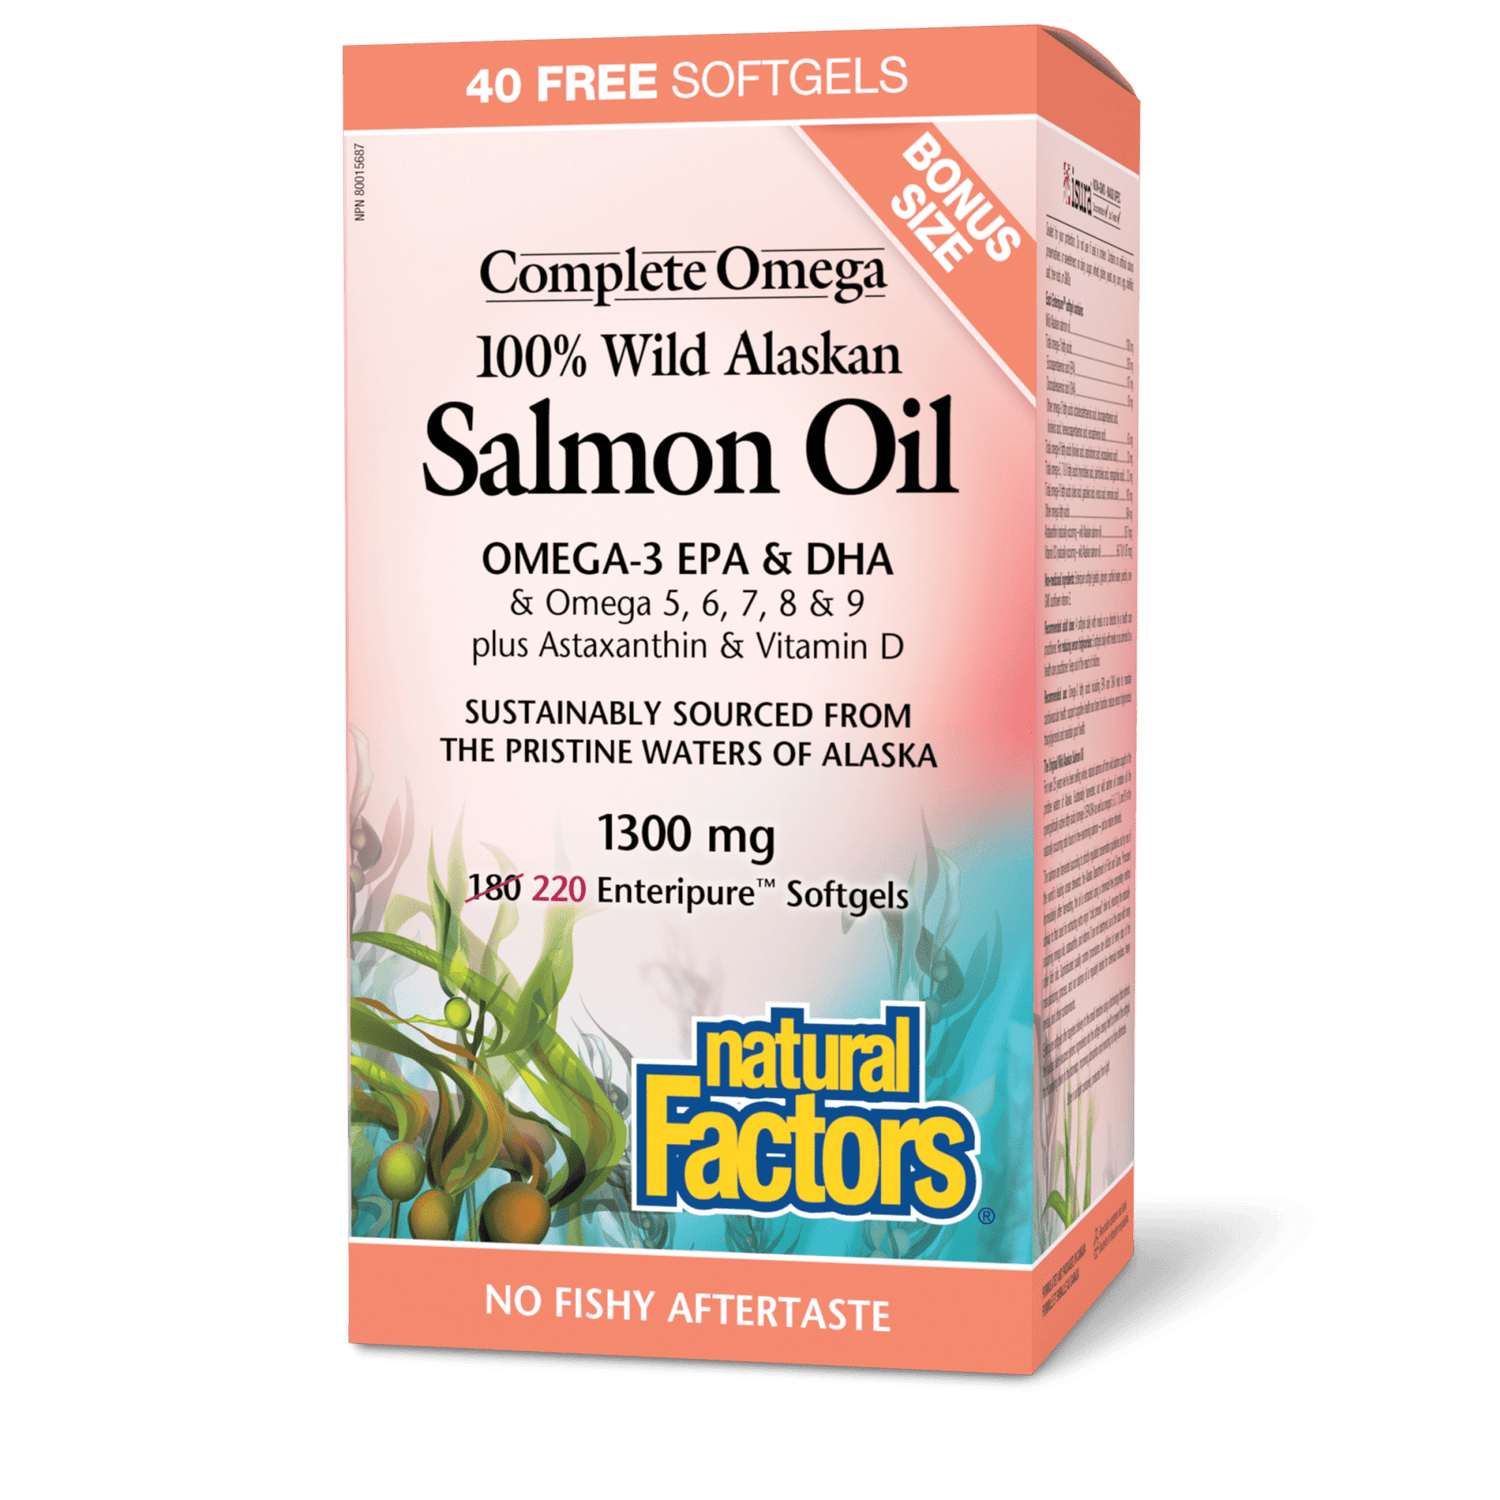 100% Wild Alaskan Salmon Oil 1300 mg, Complete Omega, Natural Factors|v|image|8266